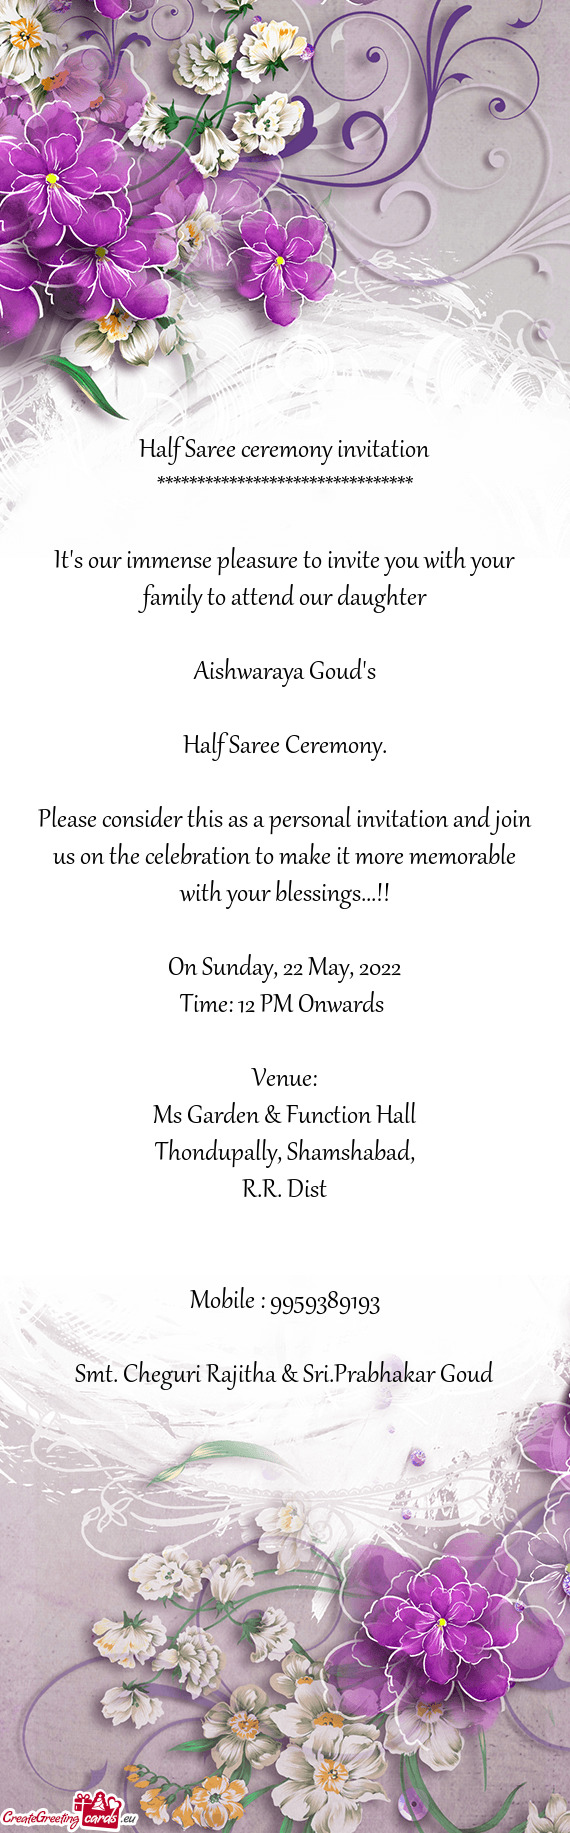 Aishwaraya Goud